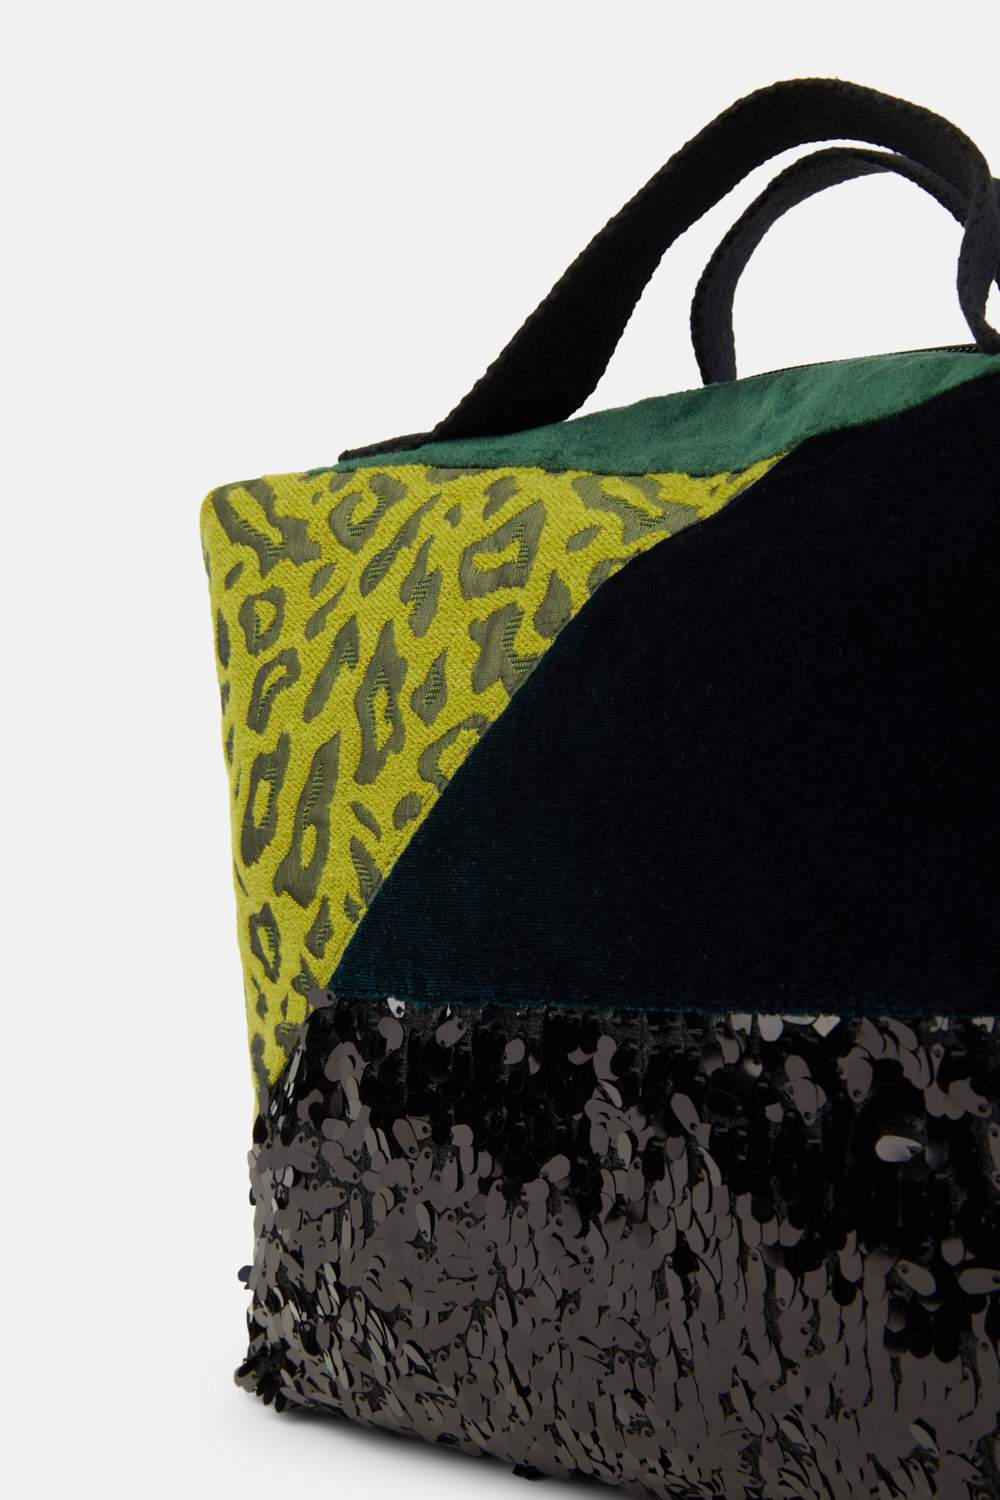 Marina Milani BAGS Serena Sequined Green & Black Suede Utility Shoulder Bag